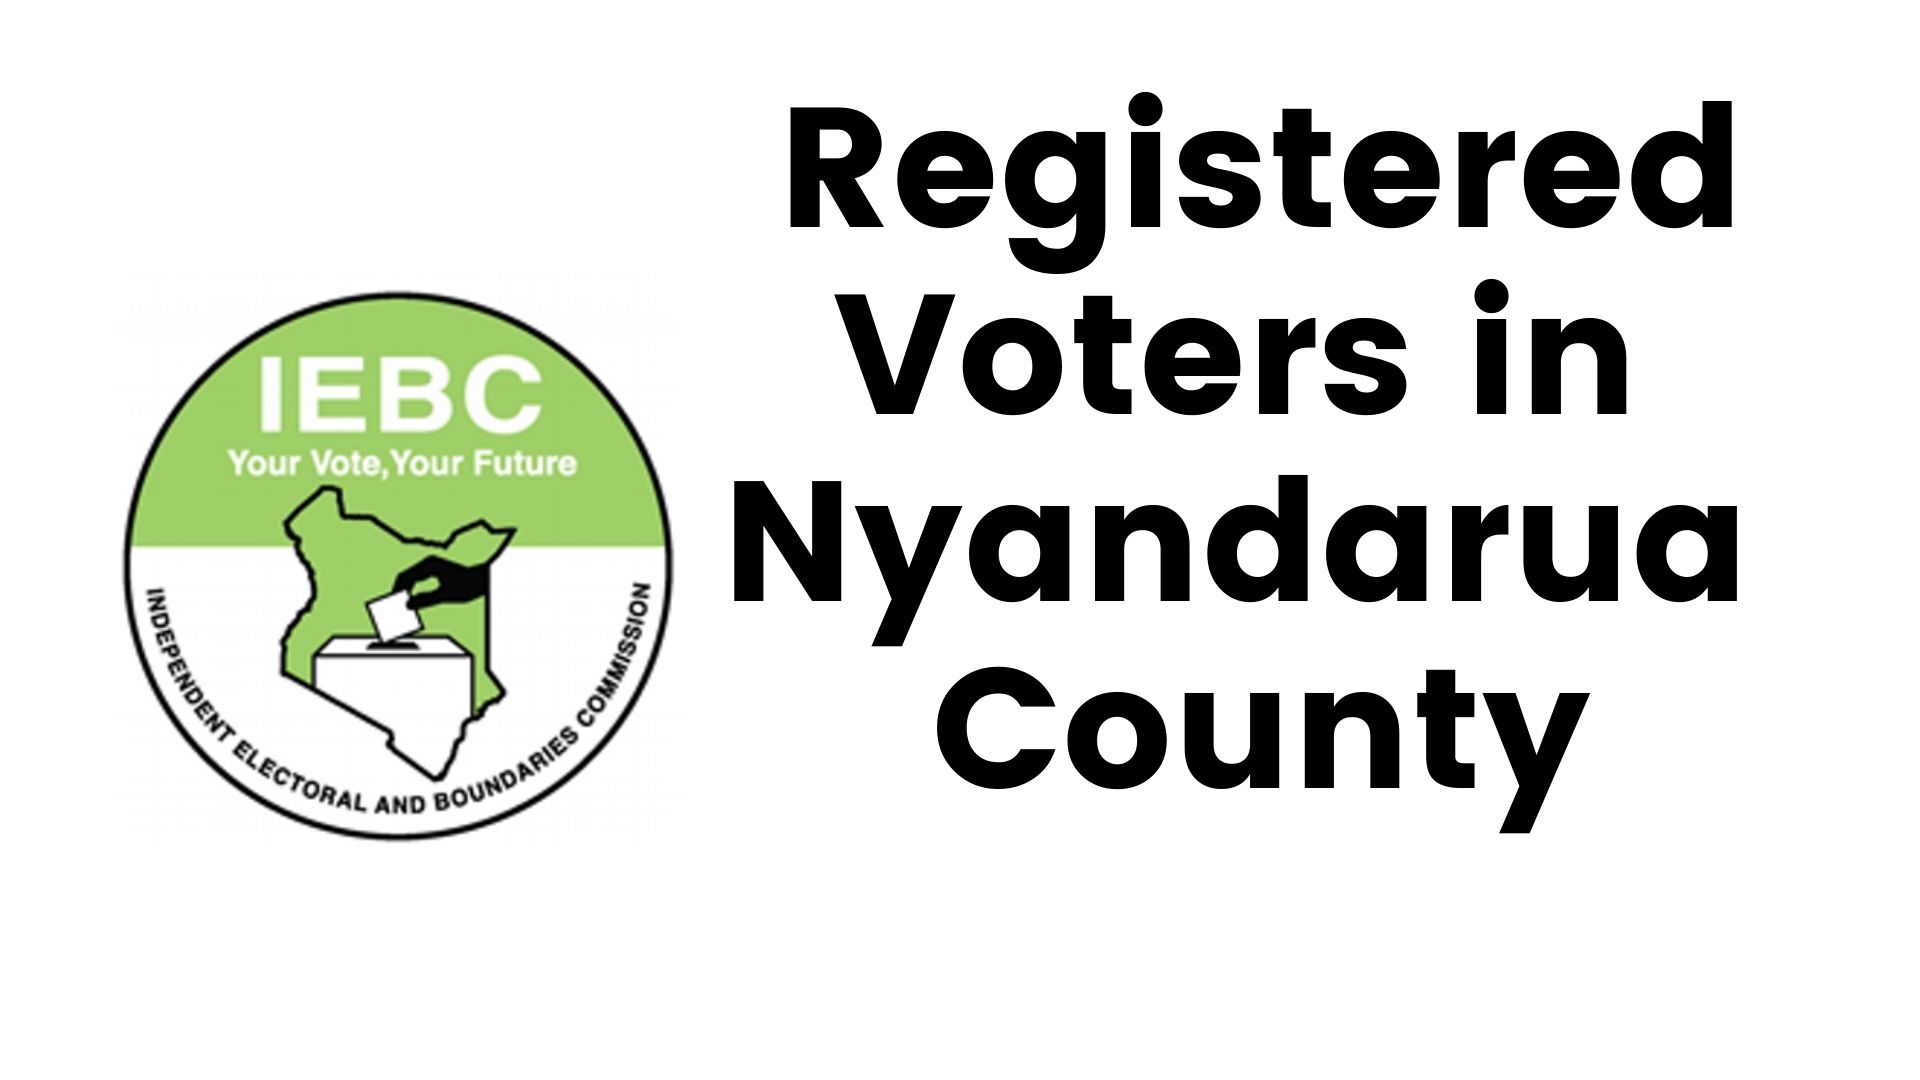 IEBC Nyandarua County Registered Voters